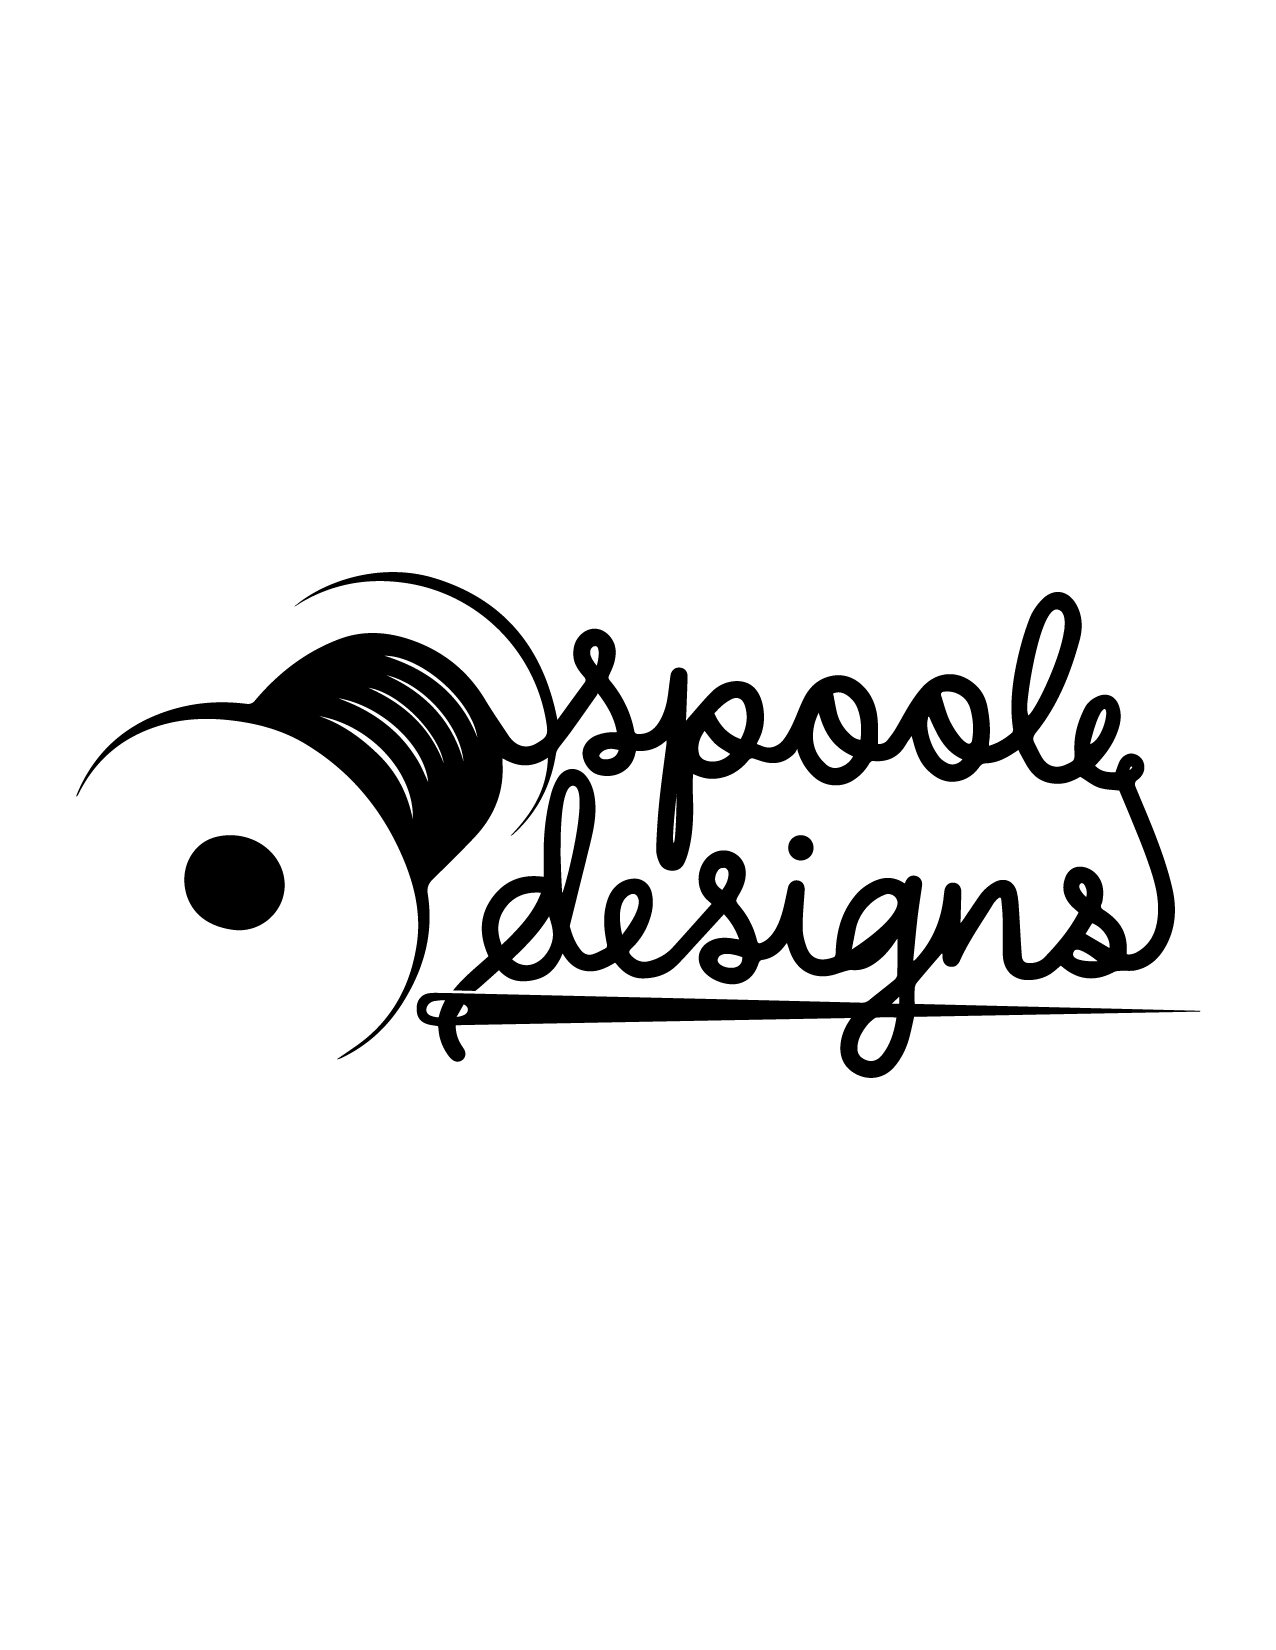 Spoole design pres-05.jpg